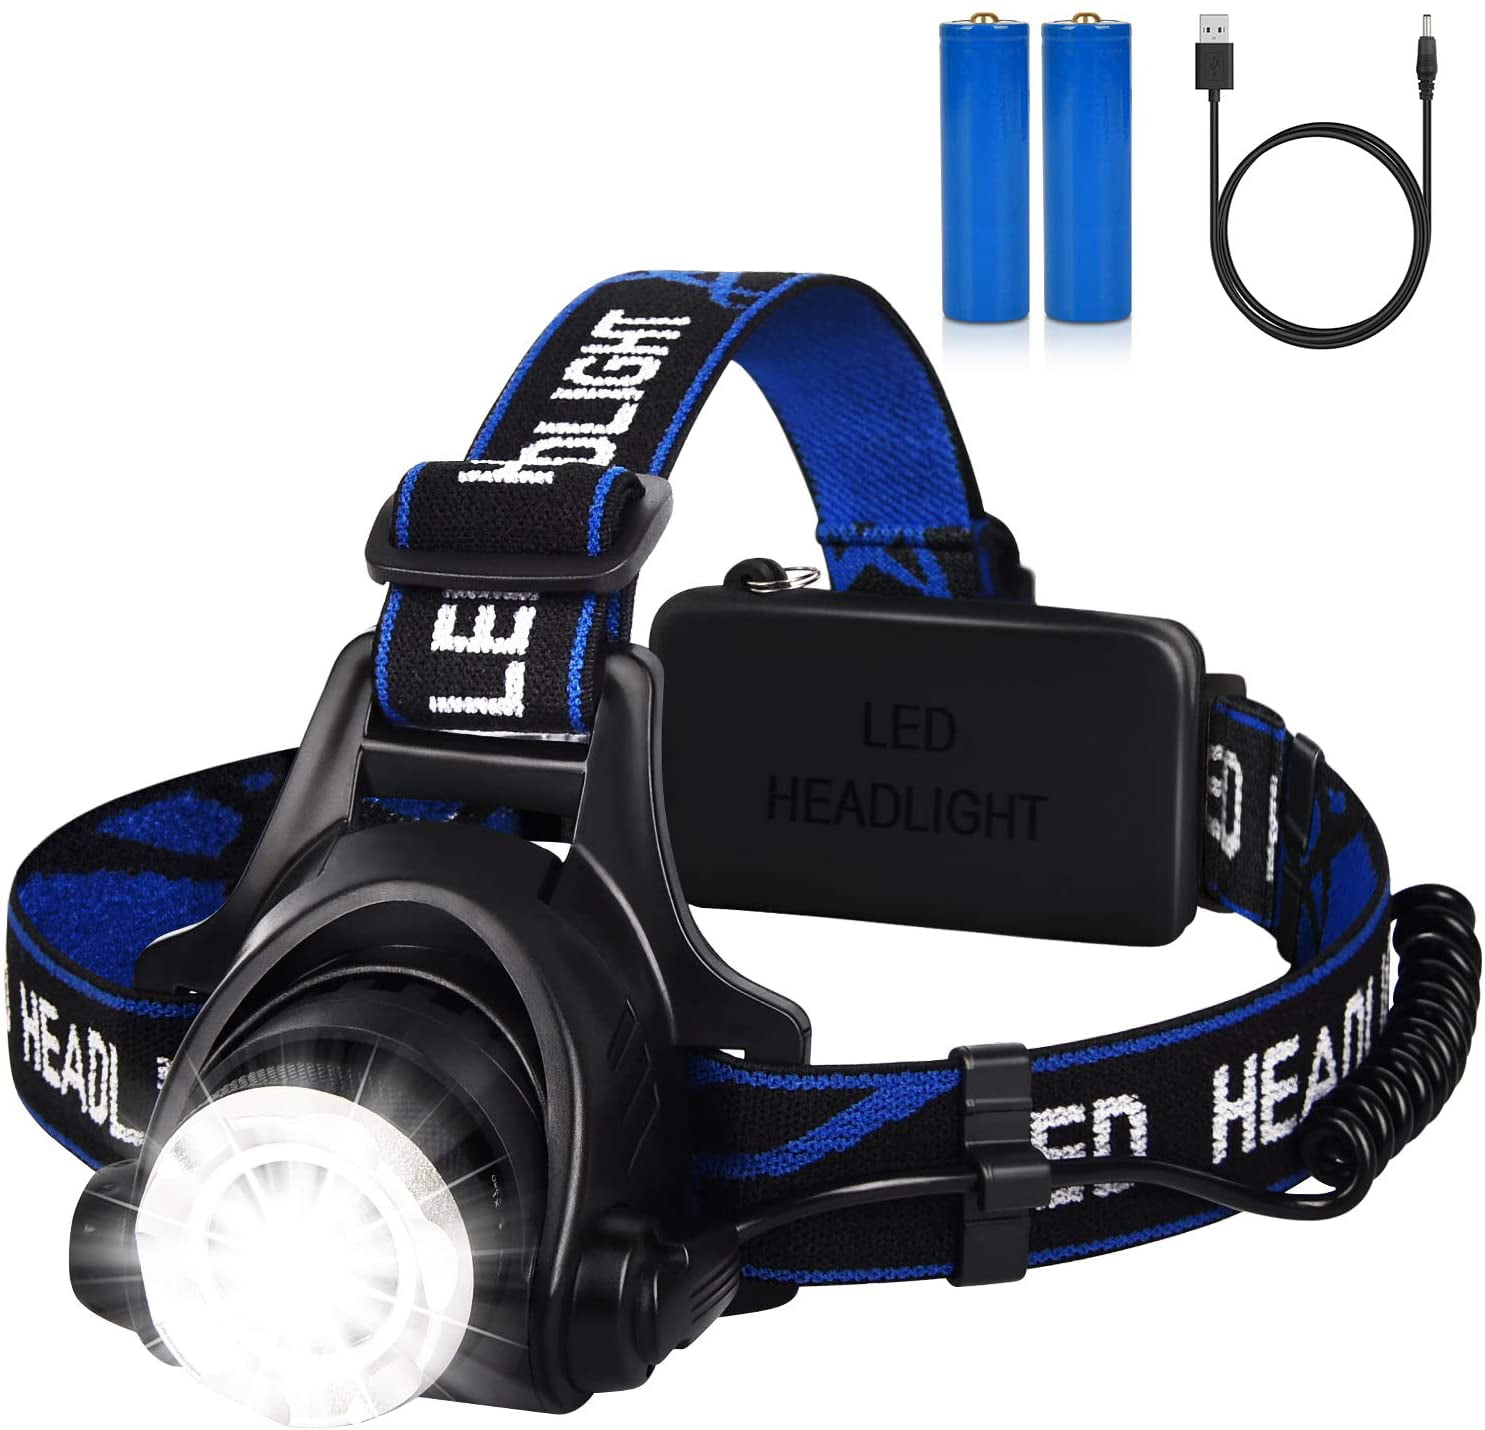 LED Rechargeable 12000 Lumens 18650 Headlamp Flashlight,Kit with 